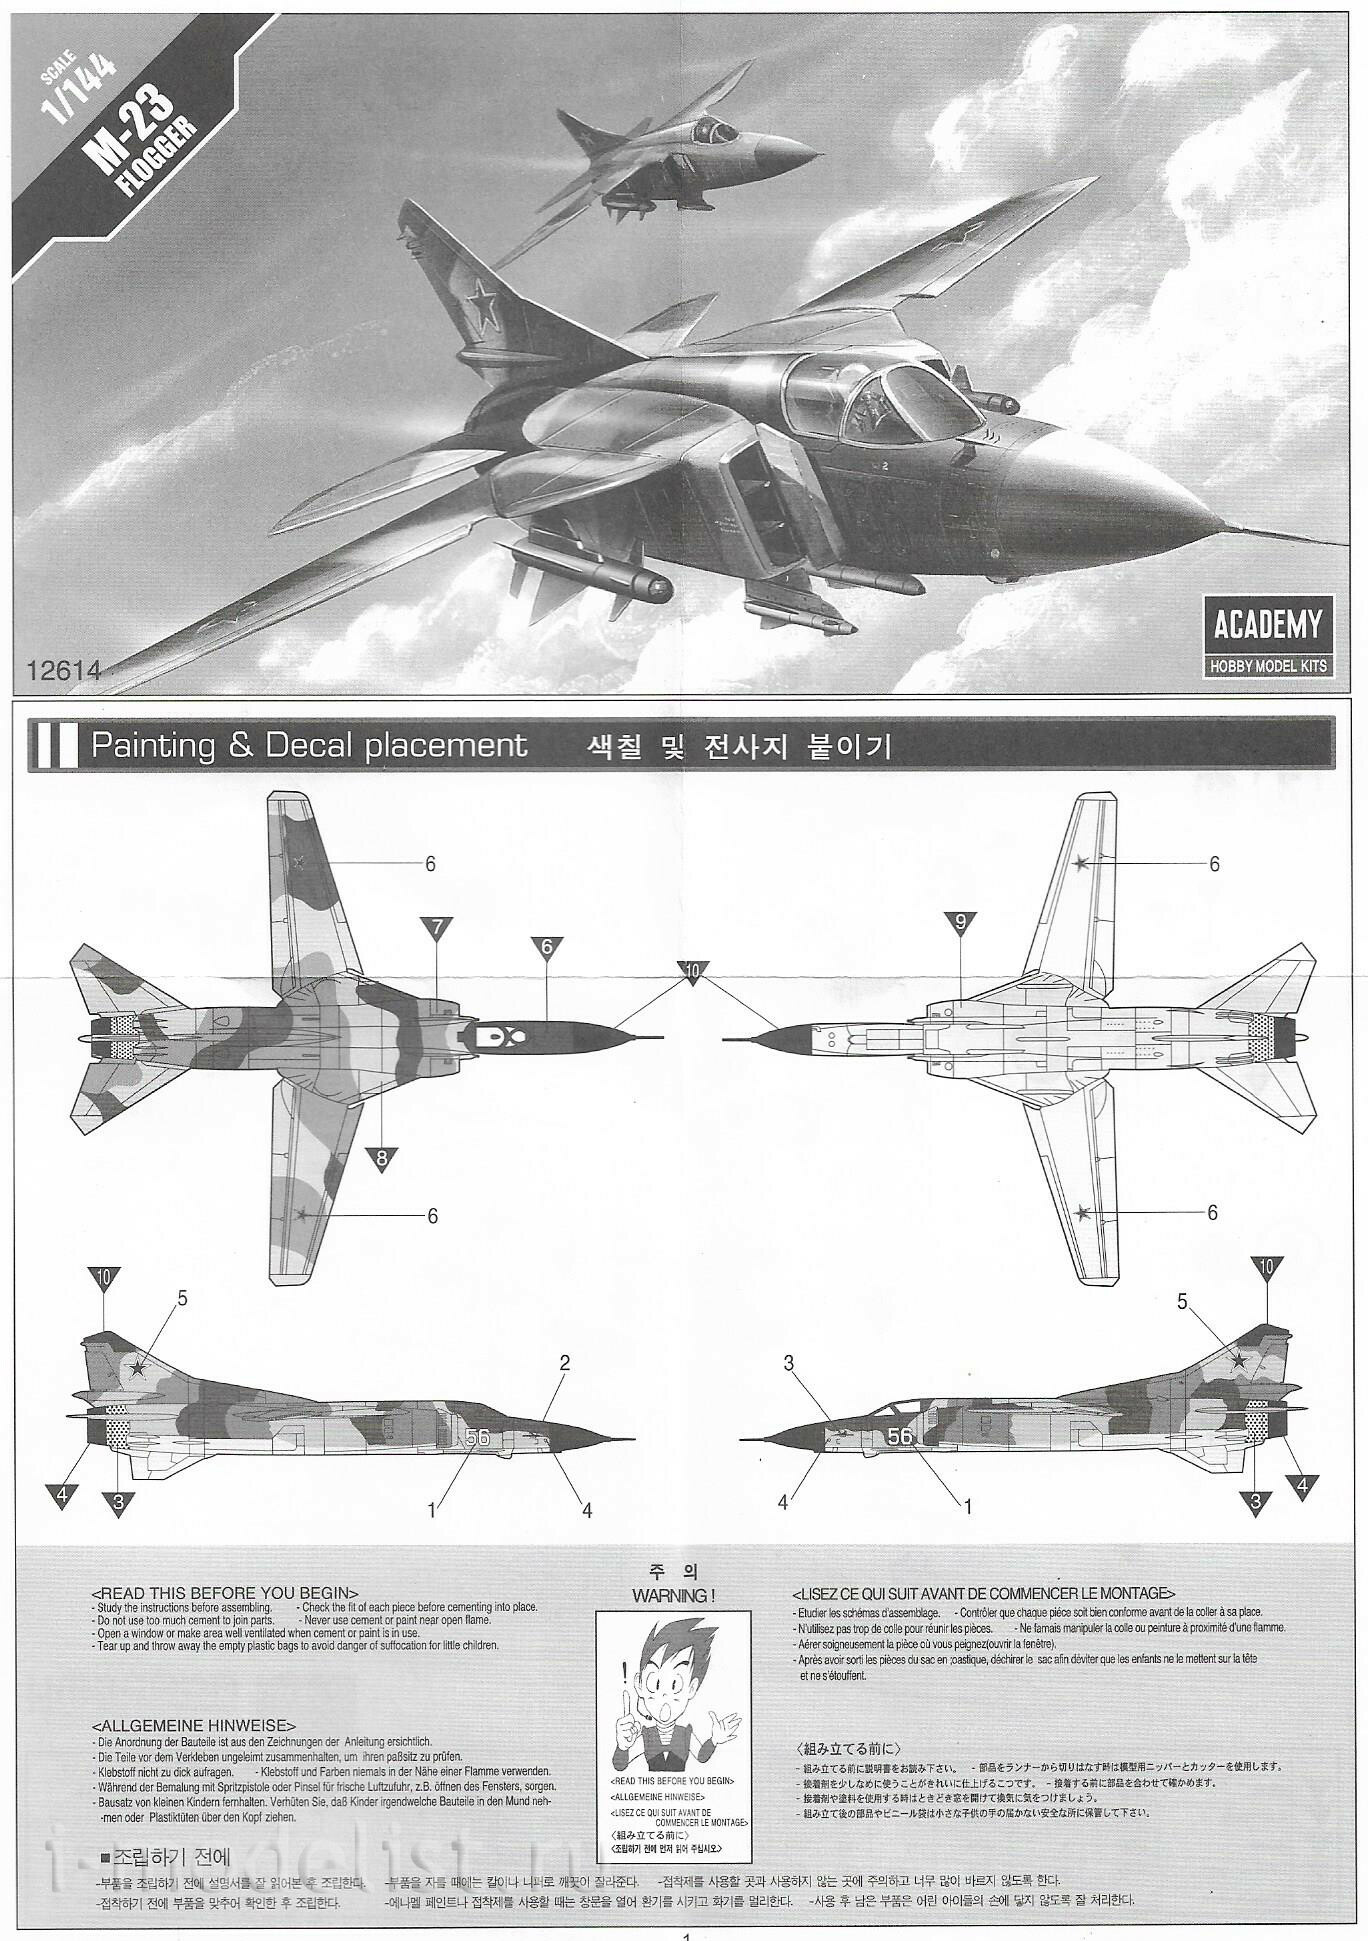 12614 Academy 1/144 MiG-23